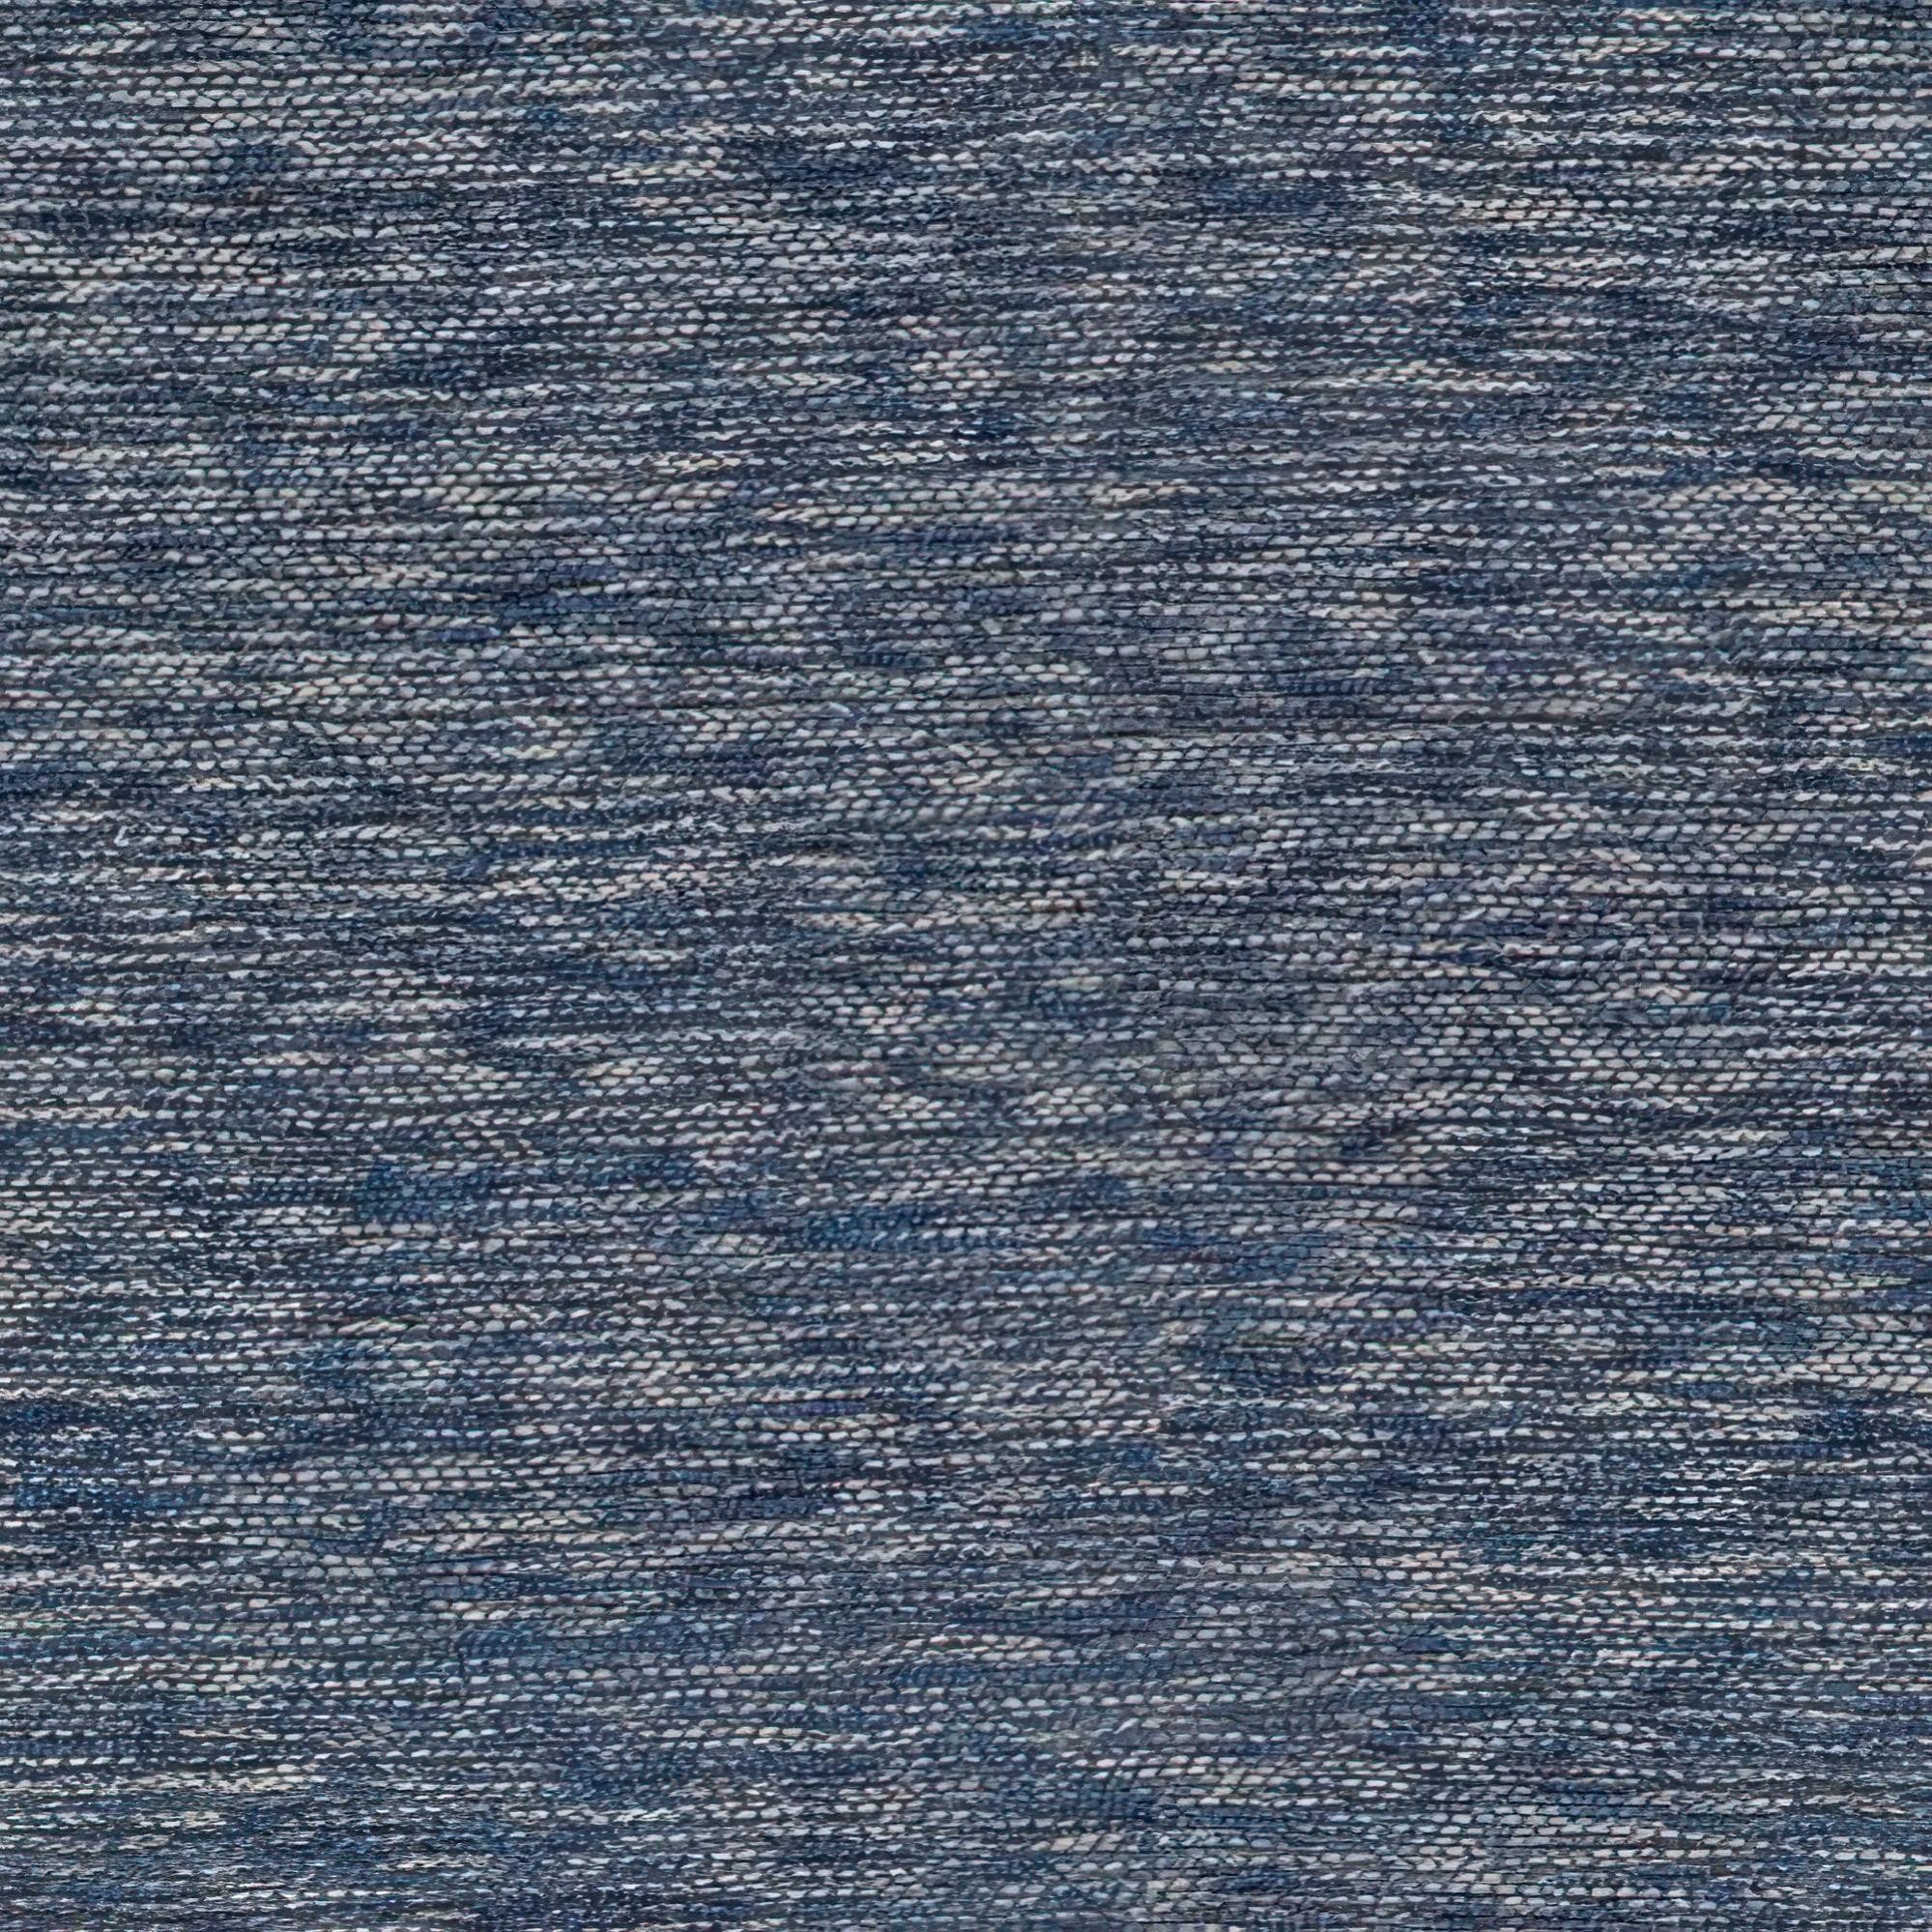 Tela al corte tapicería jacquard killin azul ancho 140 cm